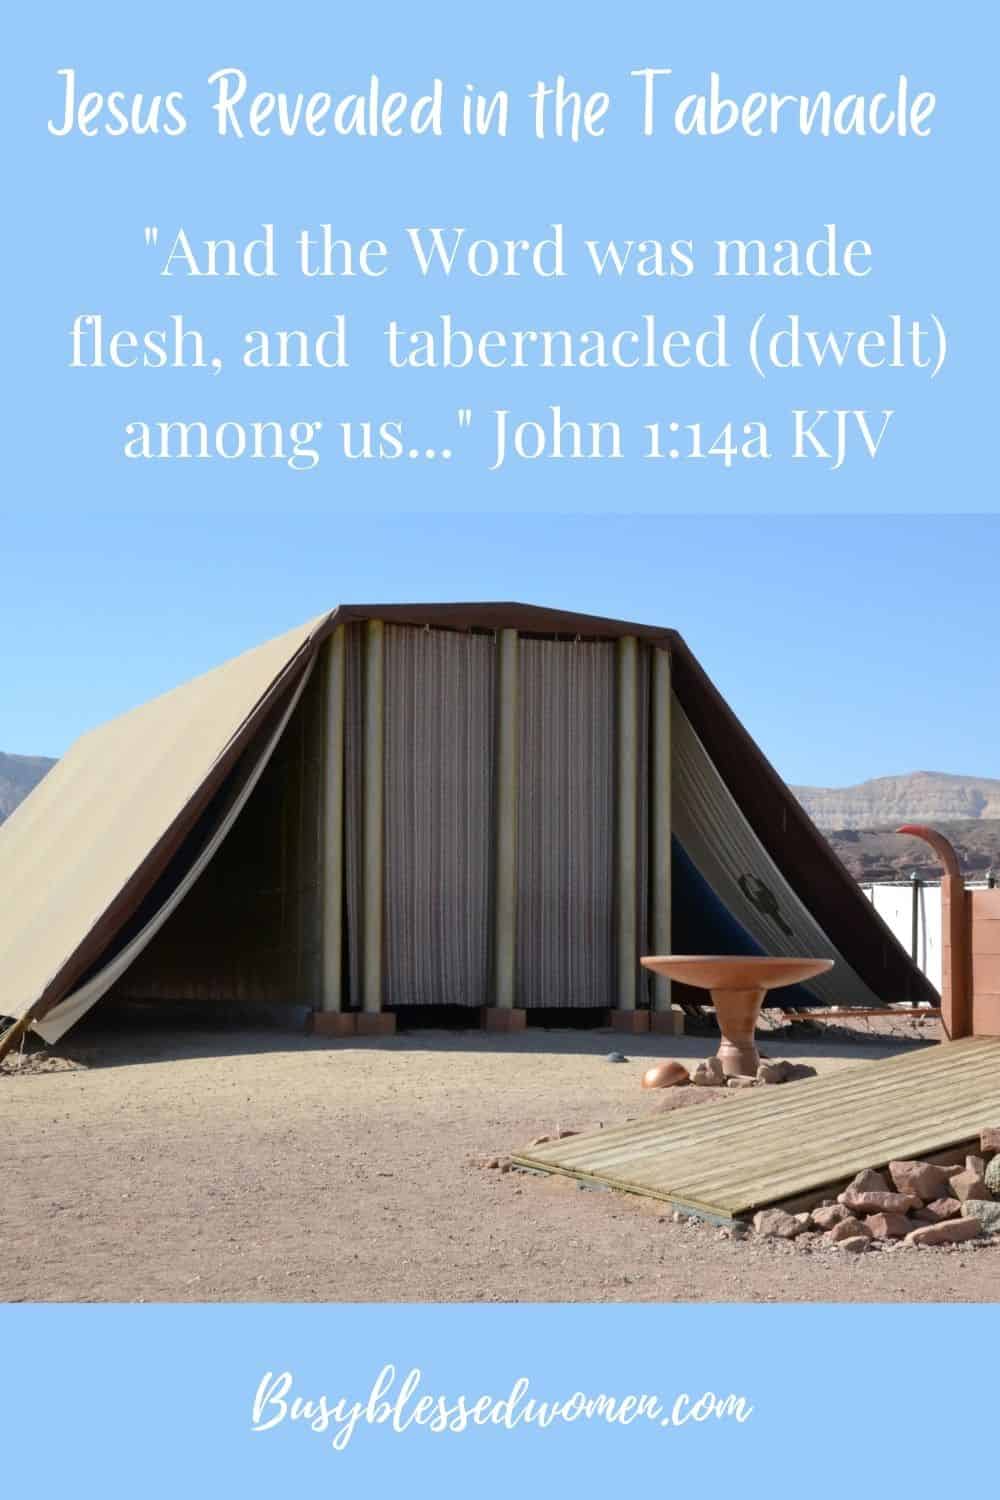 Jesus revealed in the tabernacle- replica of tabernacle erected in Negev desert under blue sky